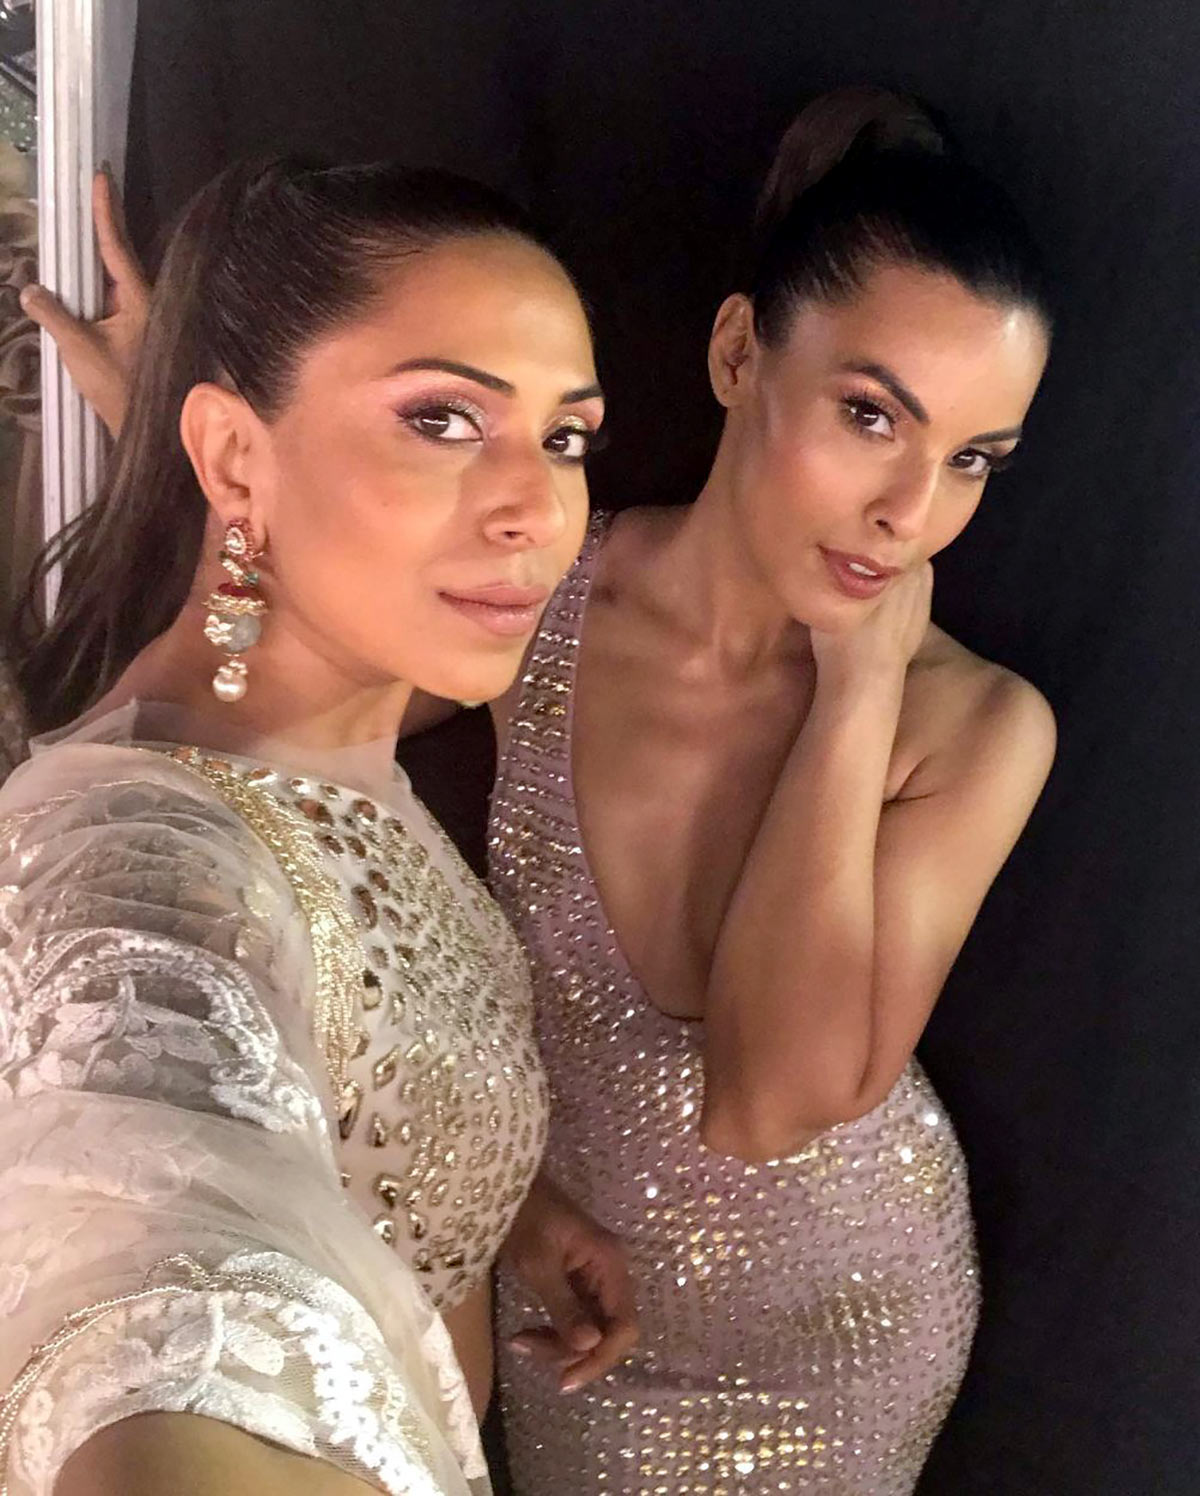 Selfie Masti Time For India's Top Models - Rediff.com